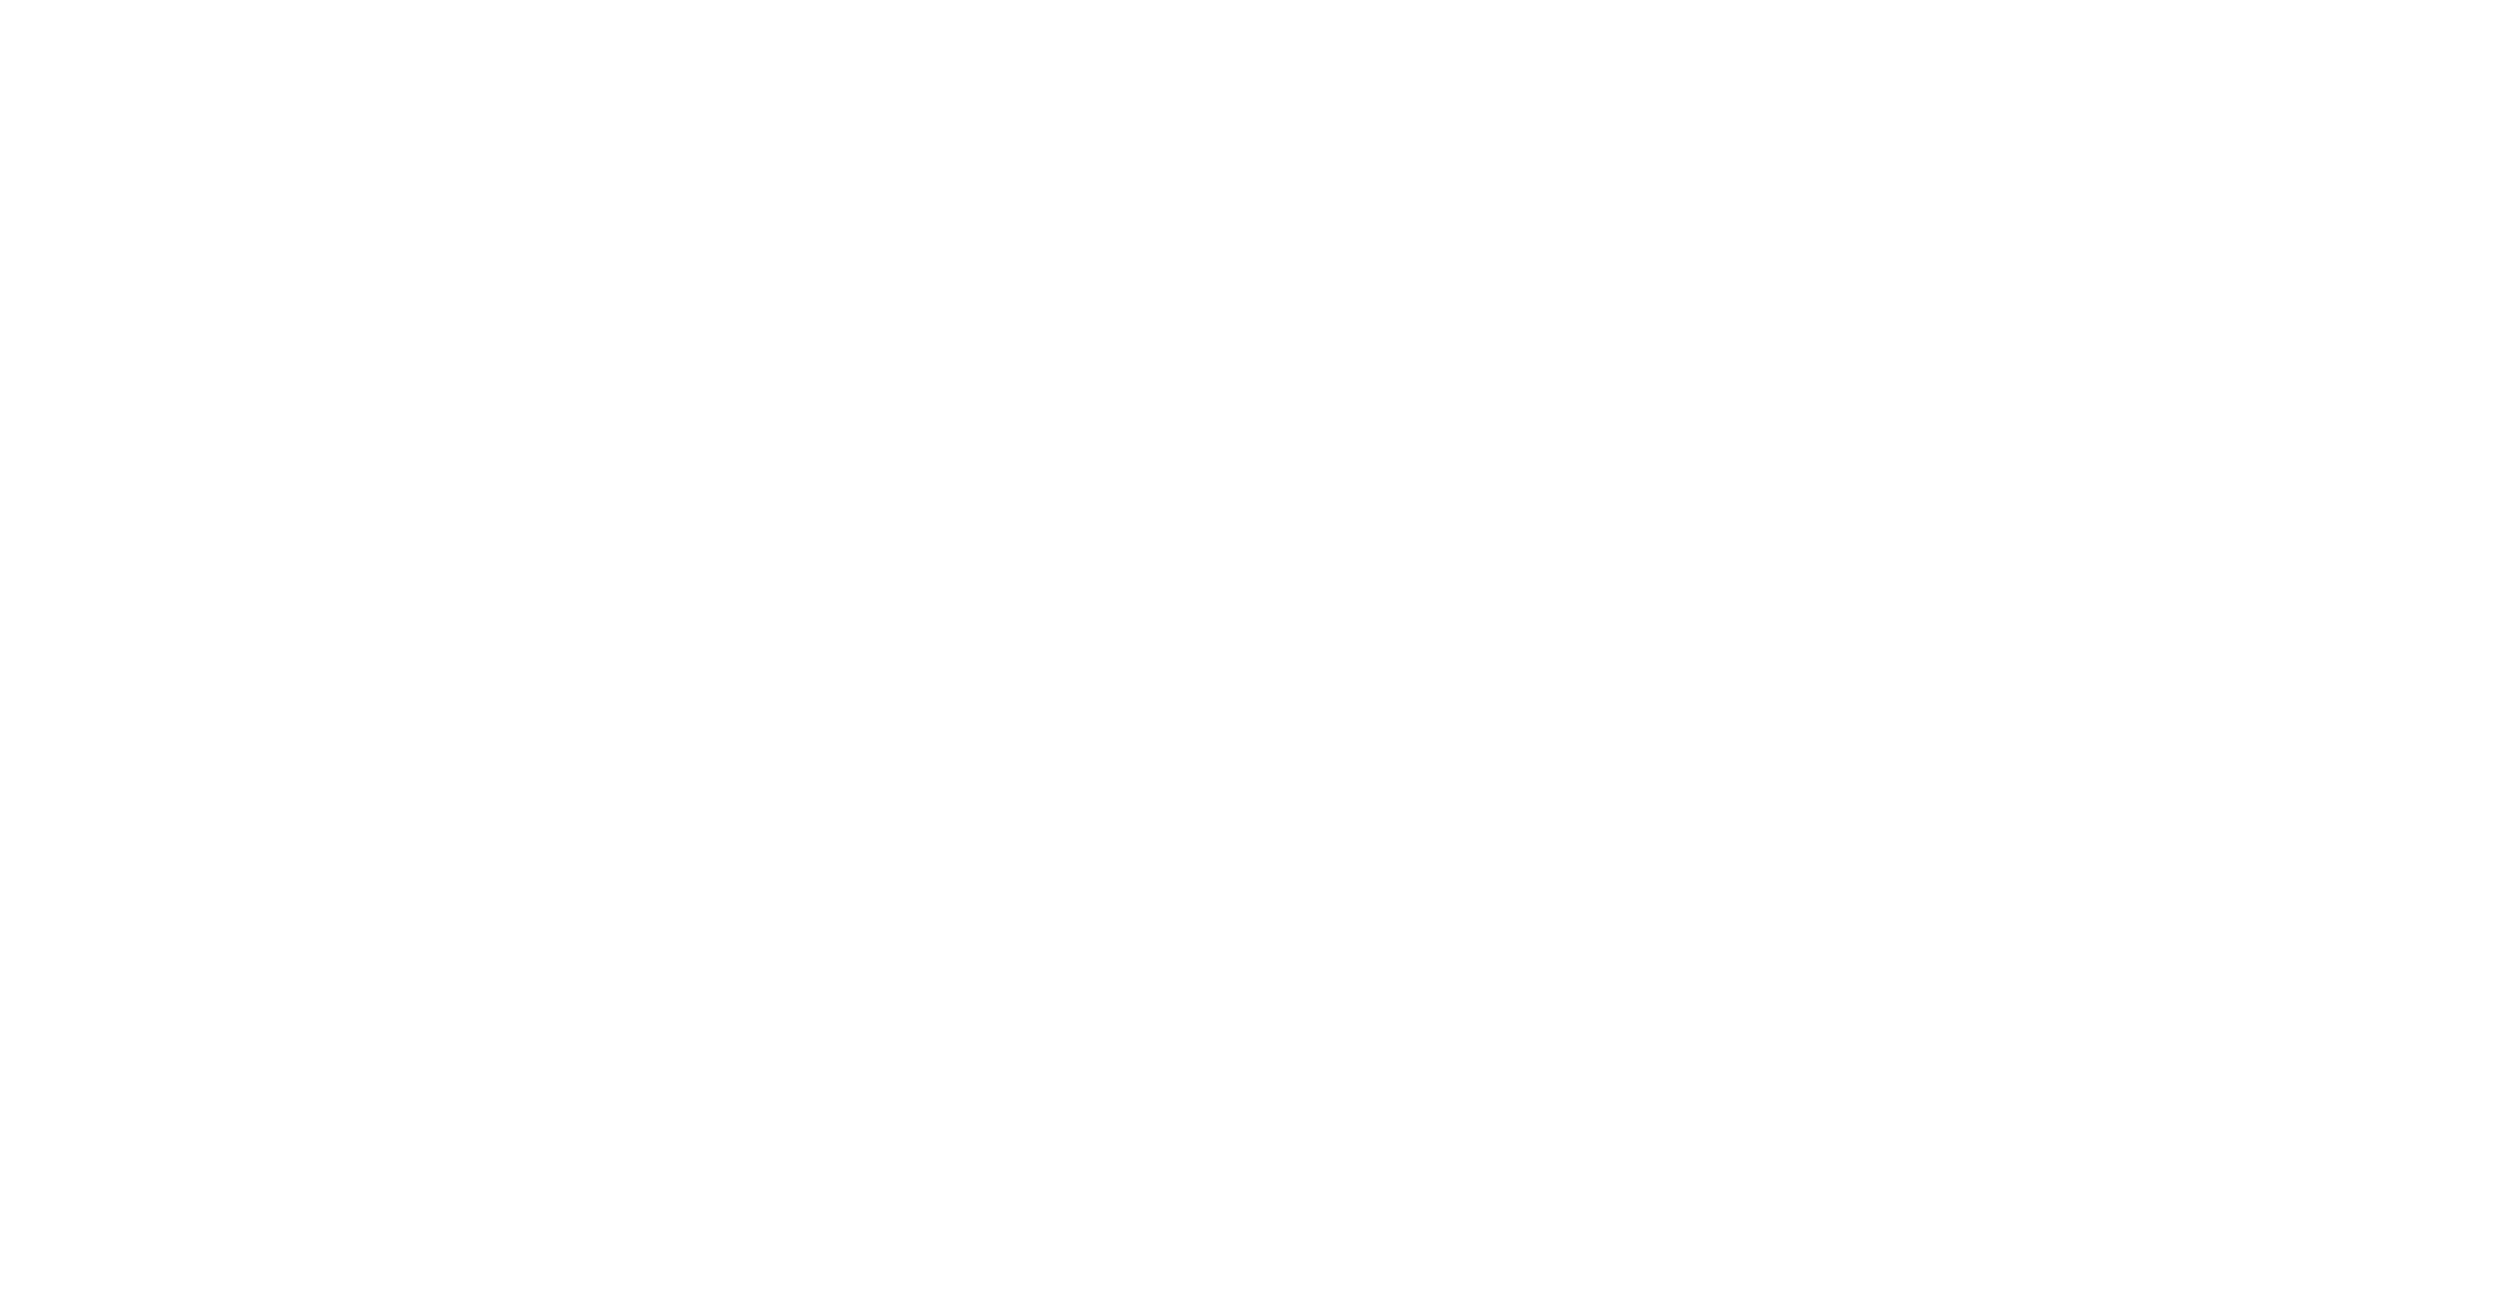 Joey + Jess Engagement